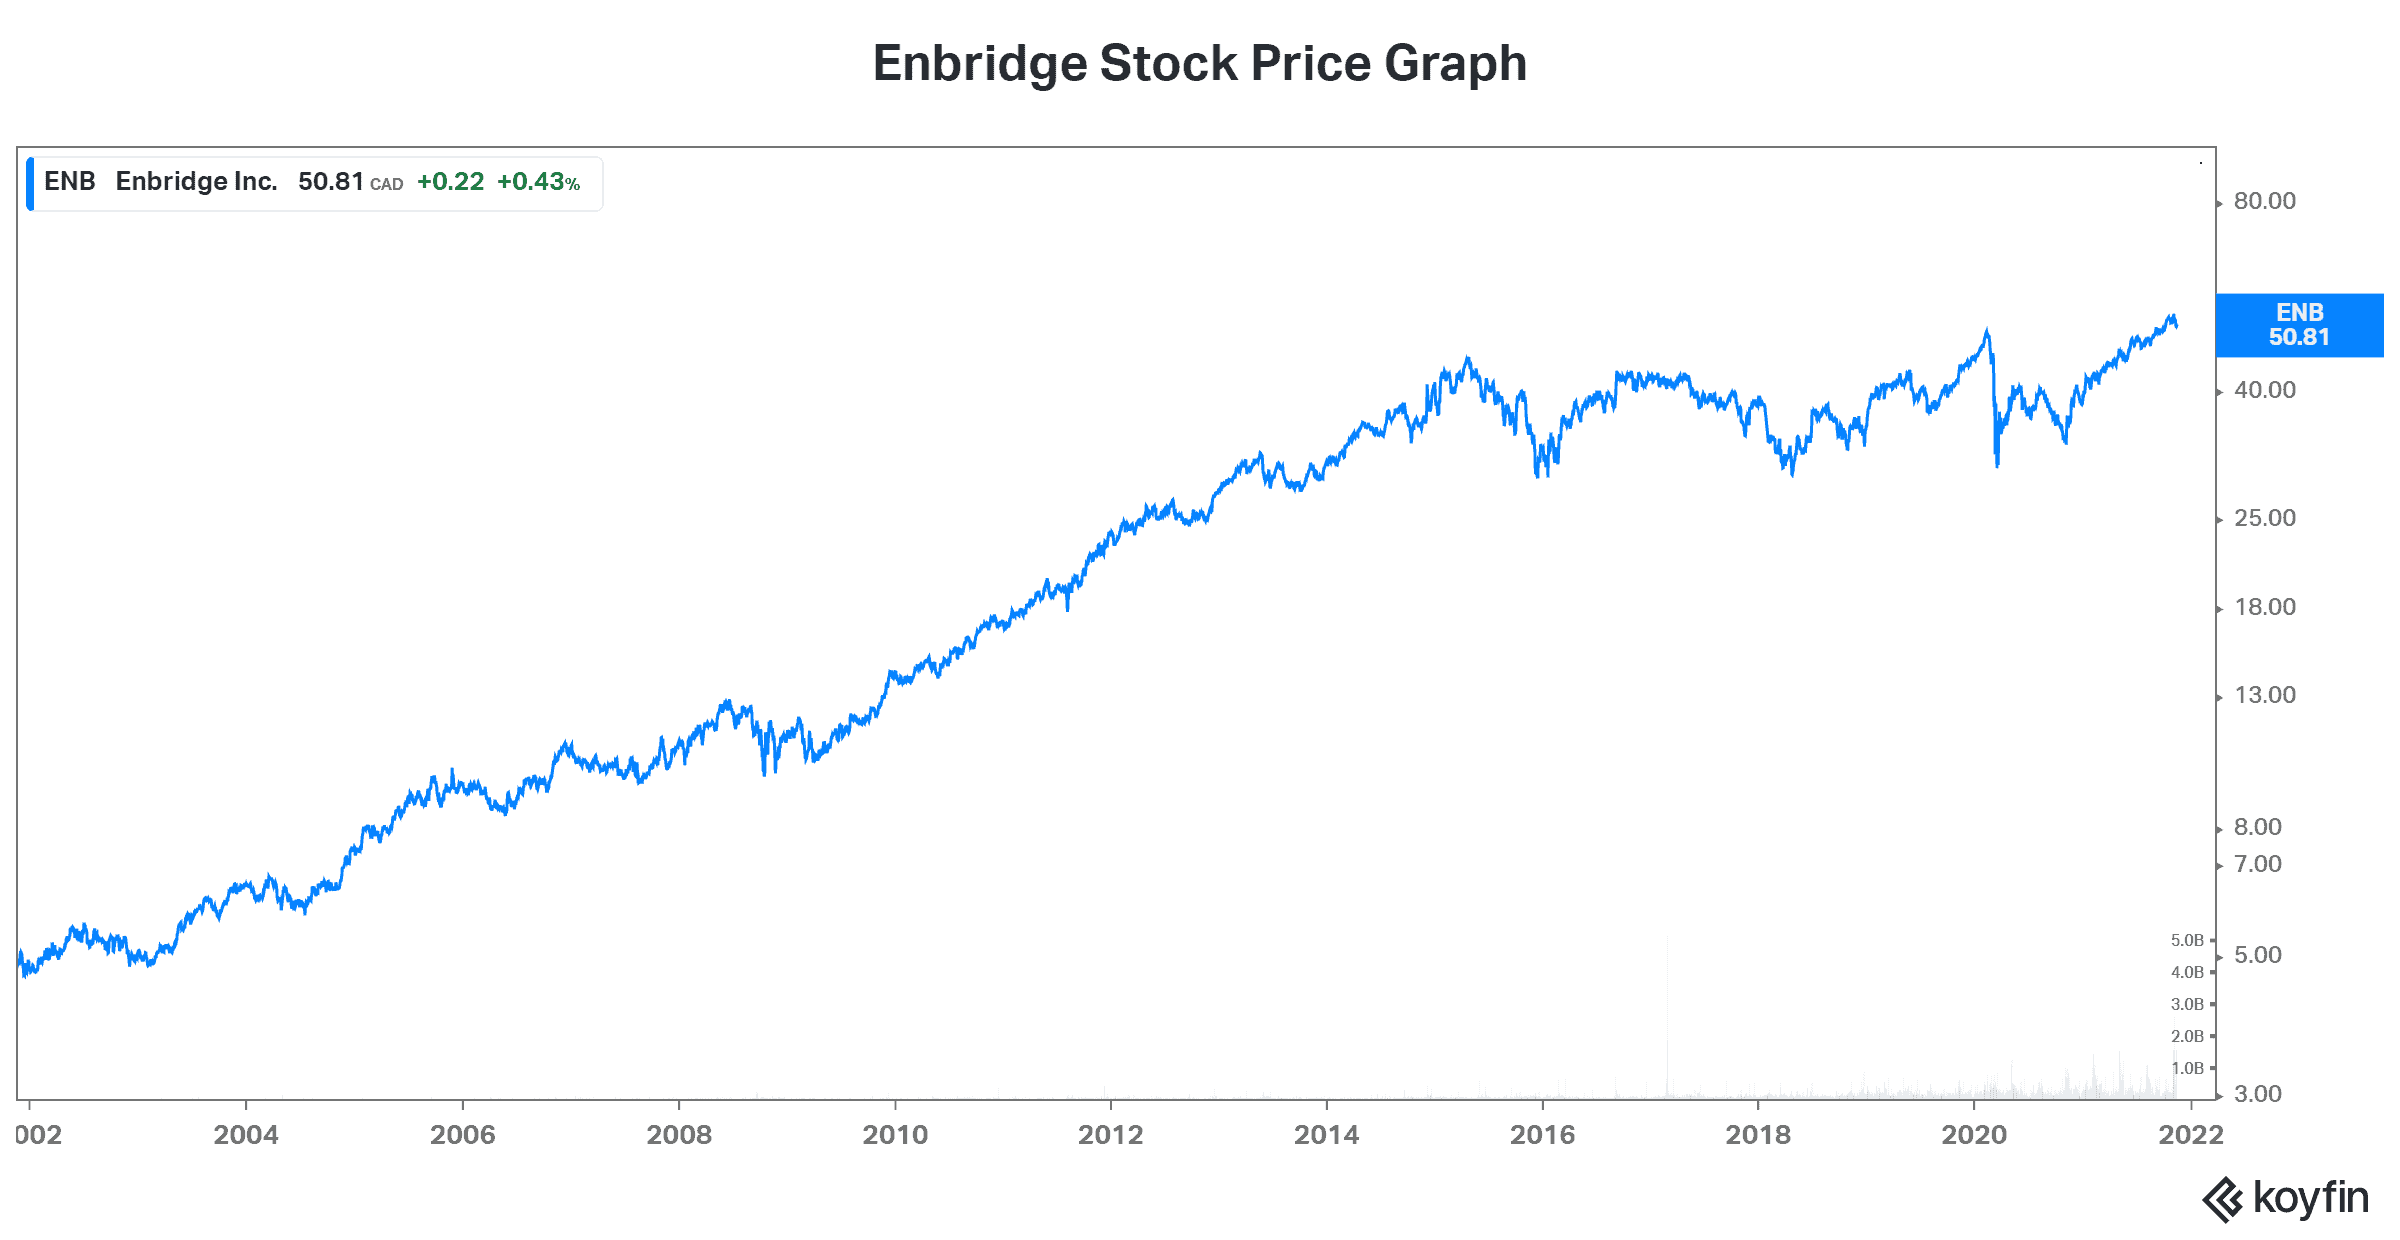 Dividend stock Enbridge